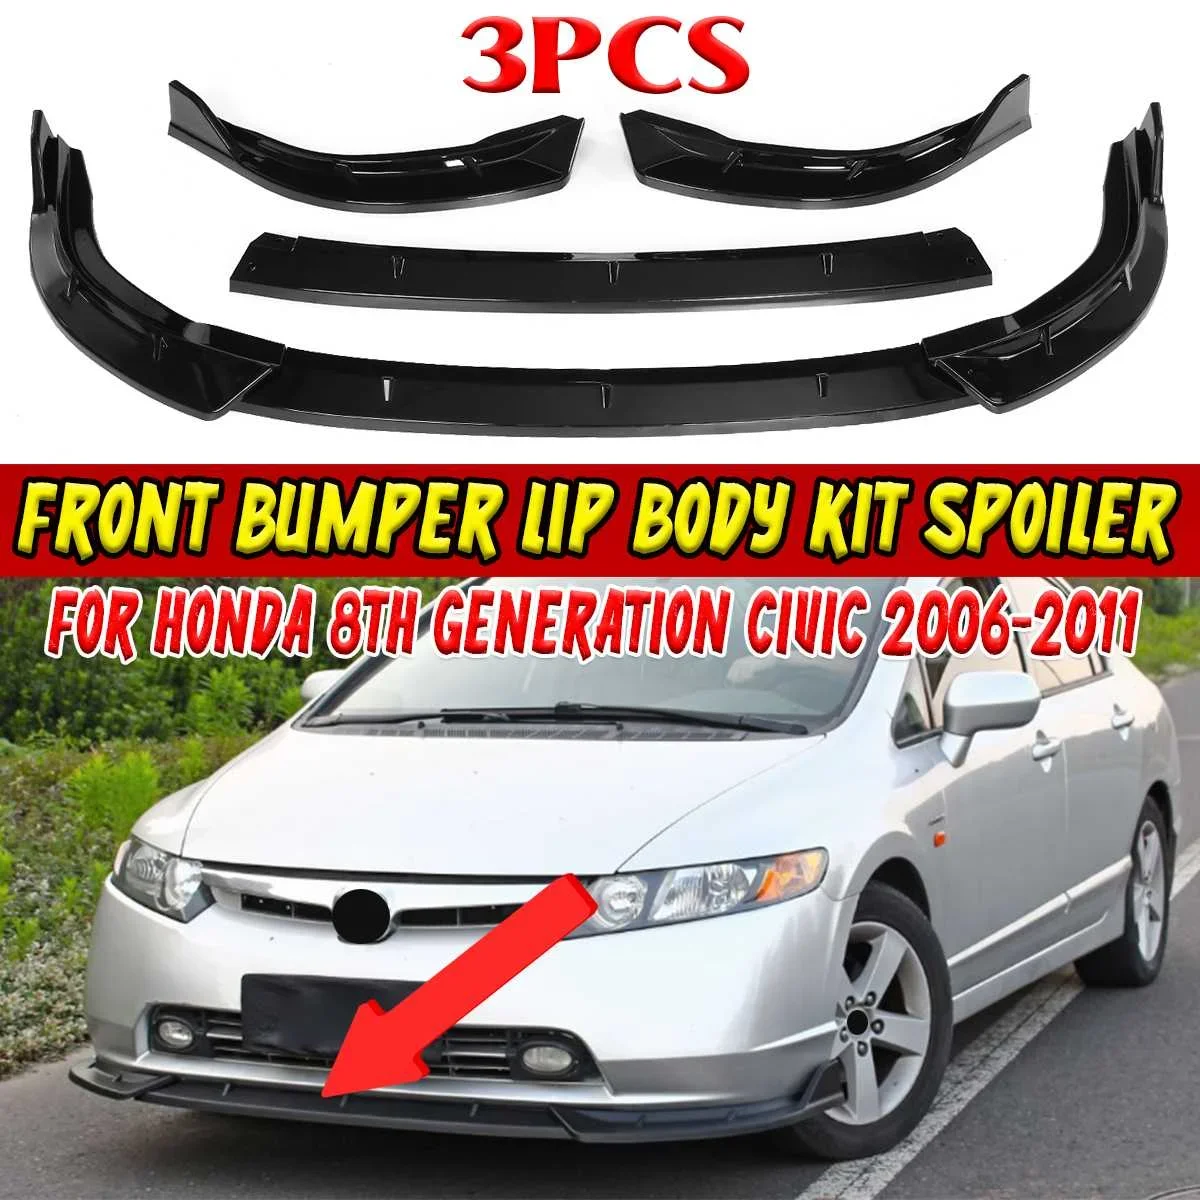 

New Car Front Bumper Lip Spoiler Splitter Surround Molding Cover Trim Body Kit For Honda For Civic 8th Generation 2006-2011